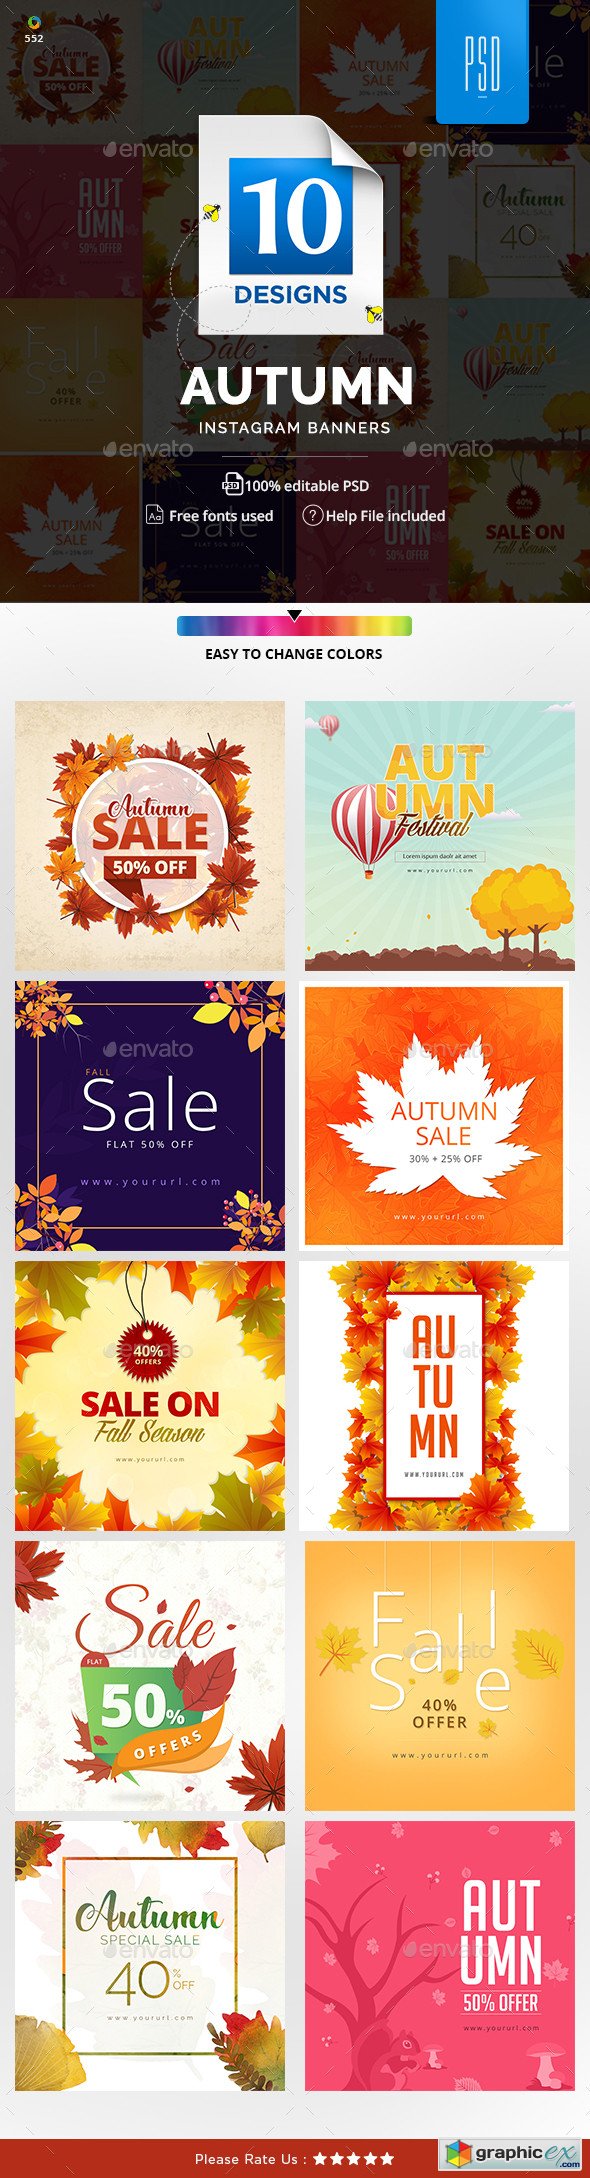 Autumn Sale Instagram Templates